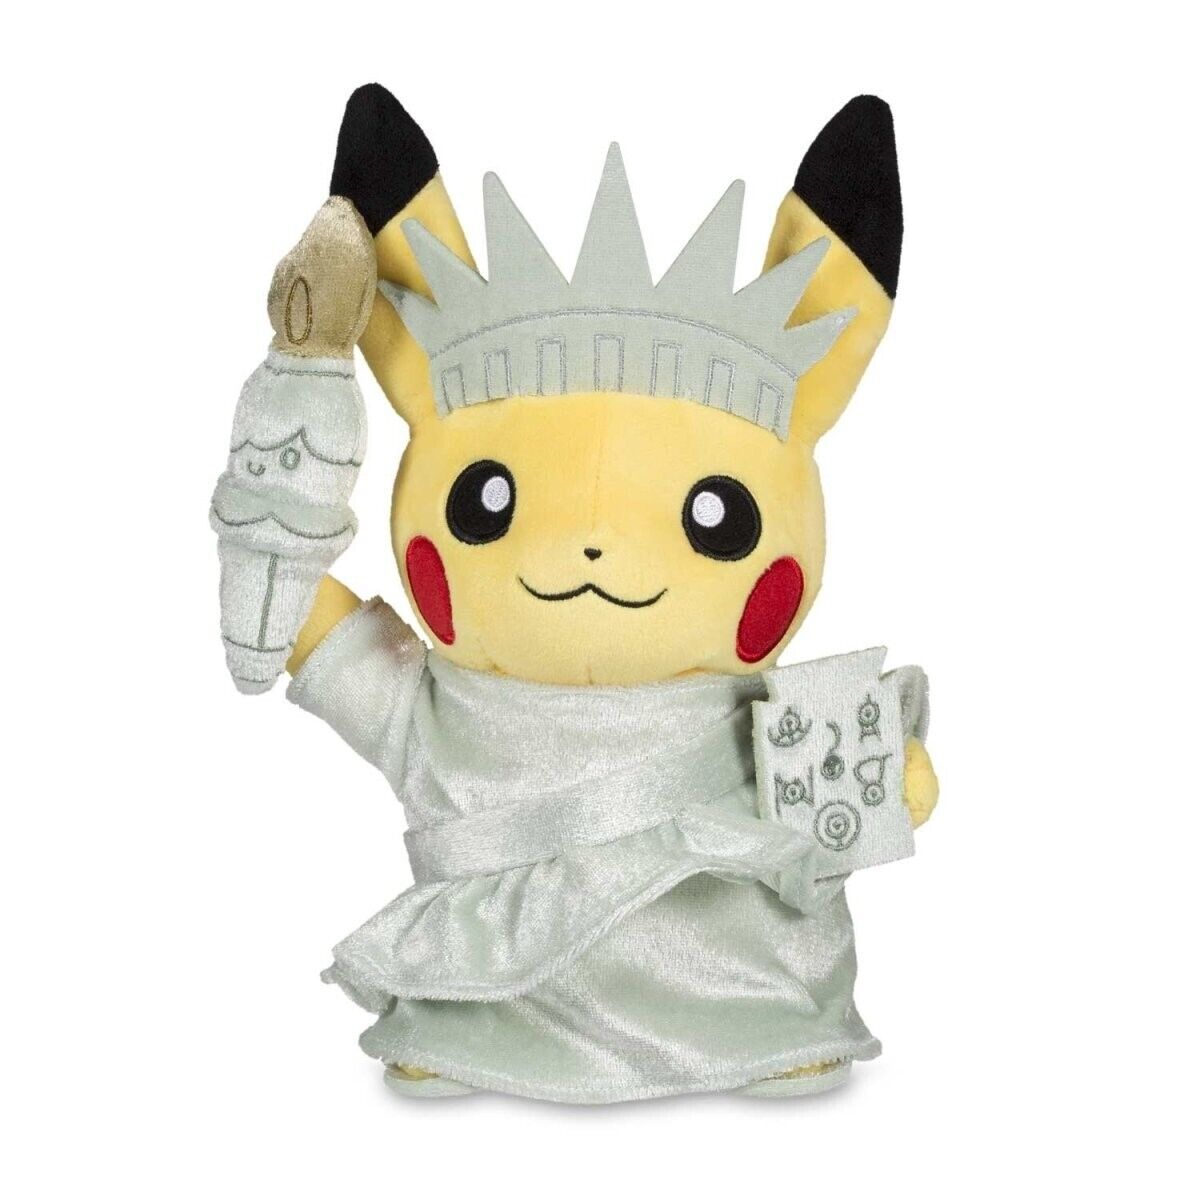 Pikachu Statue of Liberty Plush Edition NYC New- Pokemon Center Nintendo 